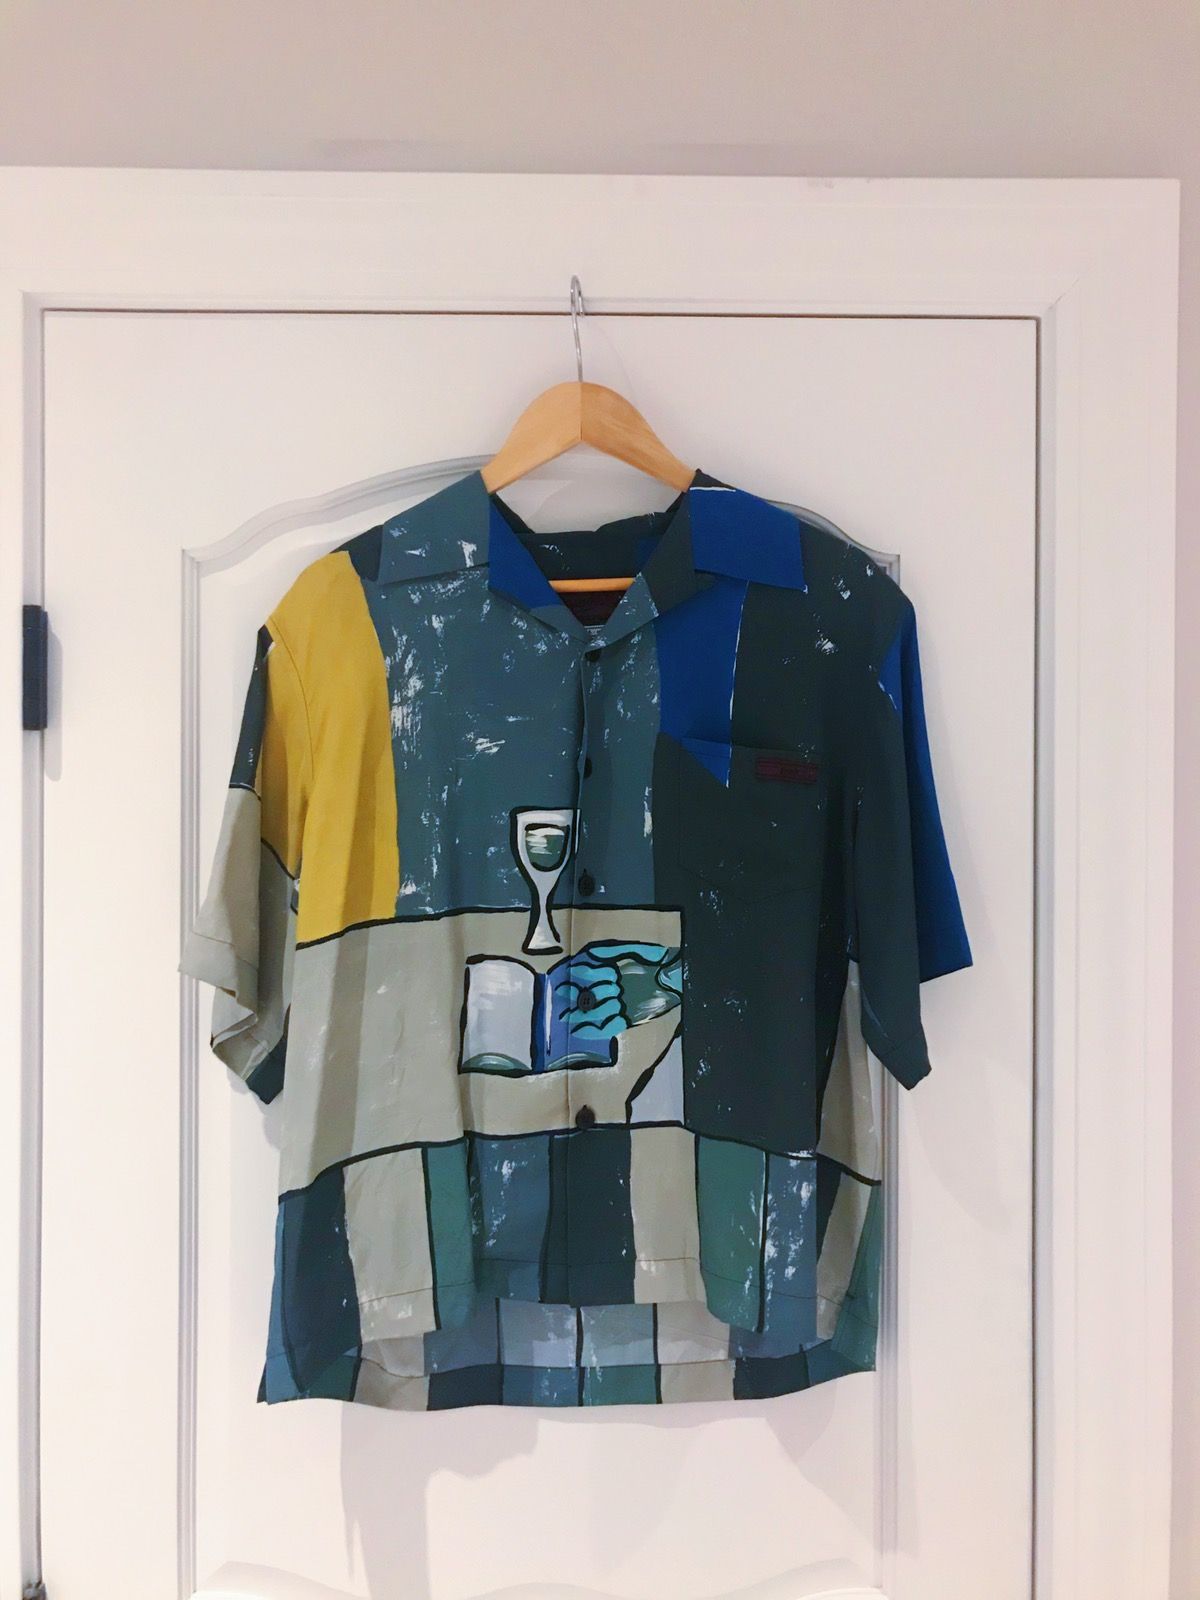 Prada Prada s/s 17 Camp Collar Painting Print Shirt | Grailed